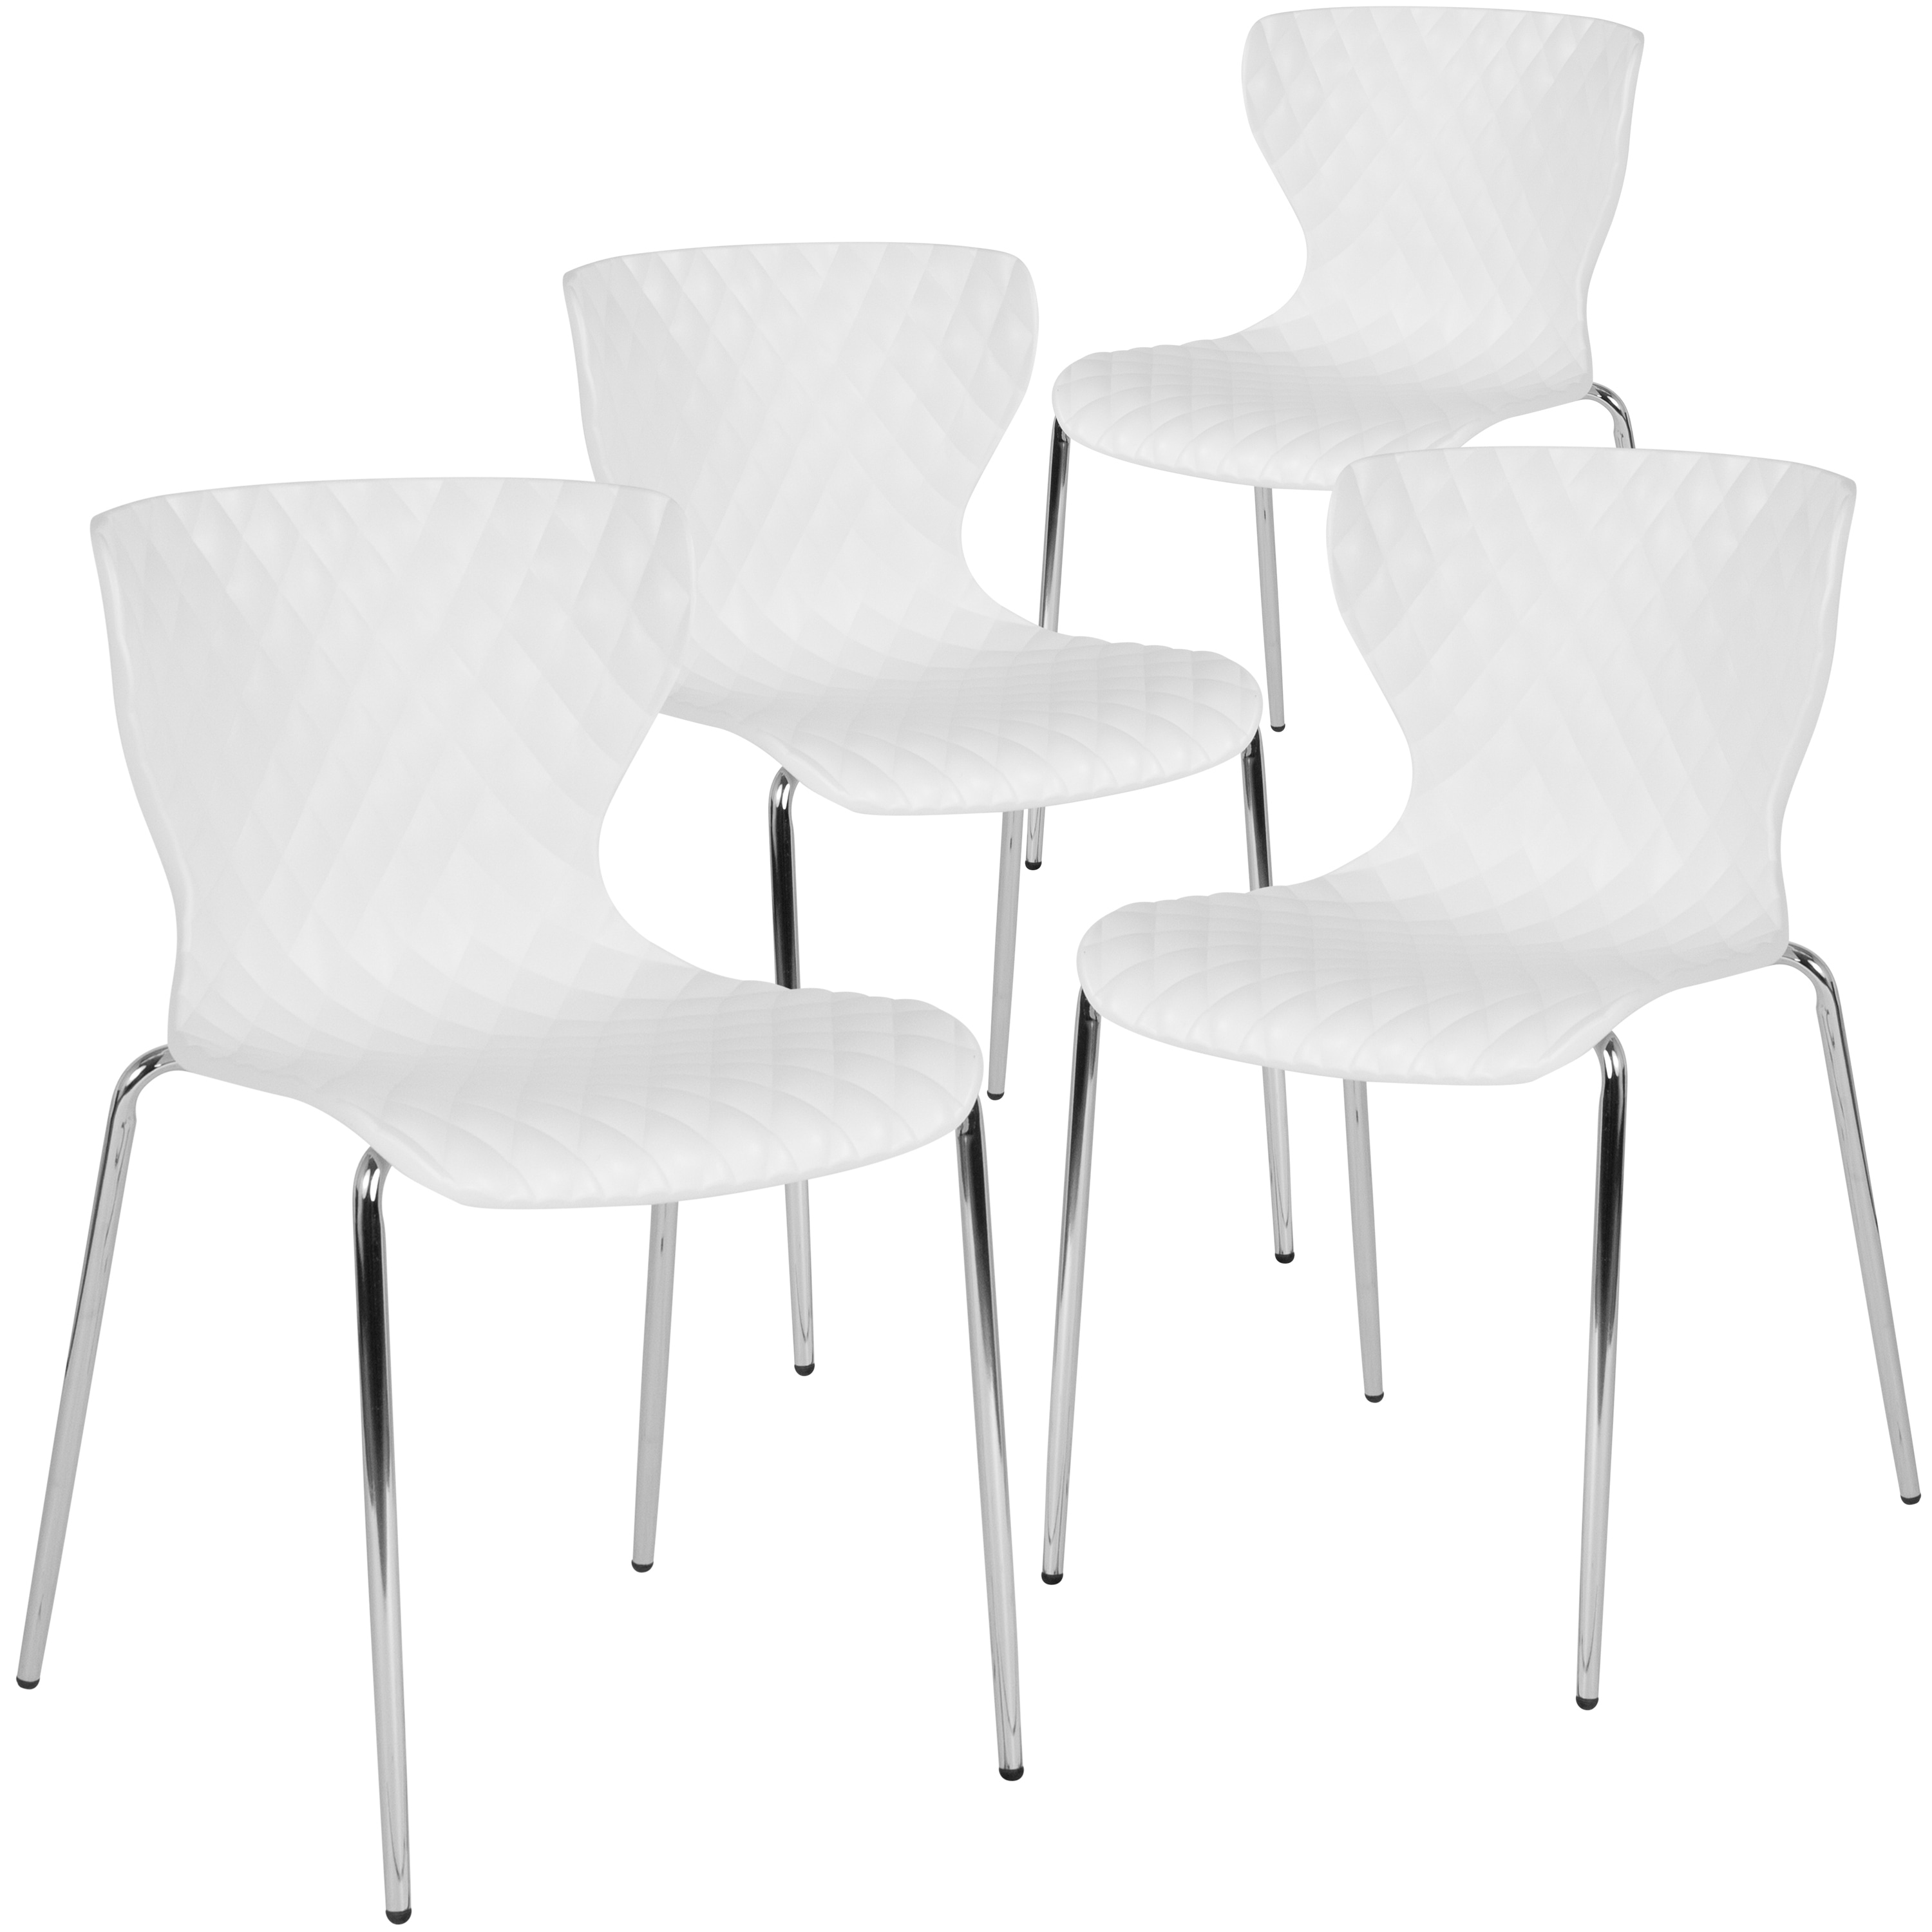 4pk contemporary design plastic stack chair